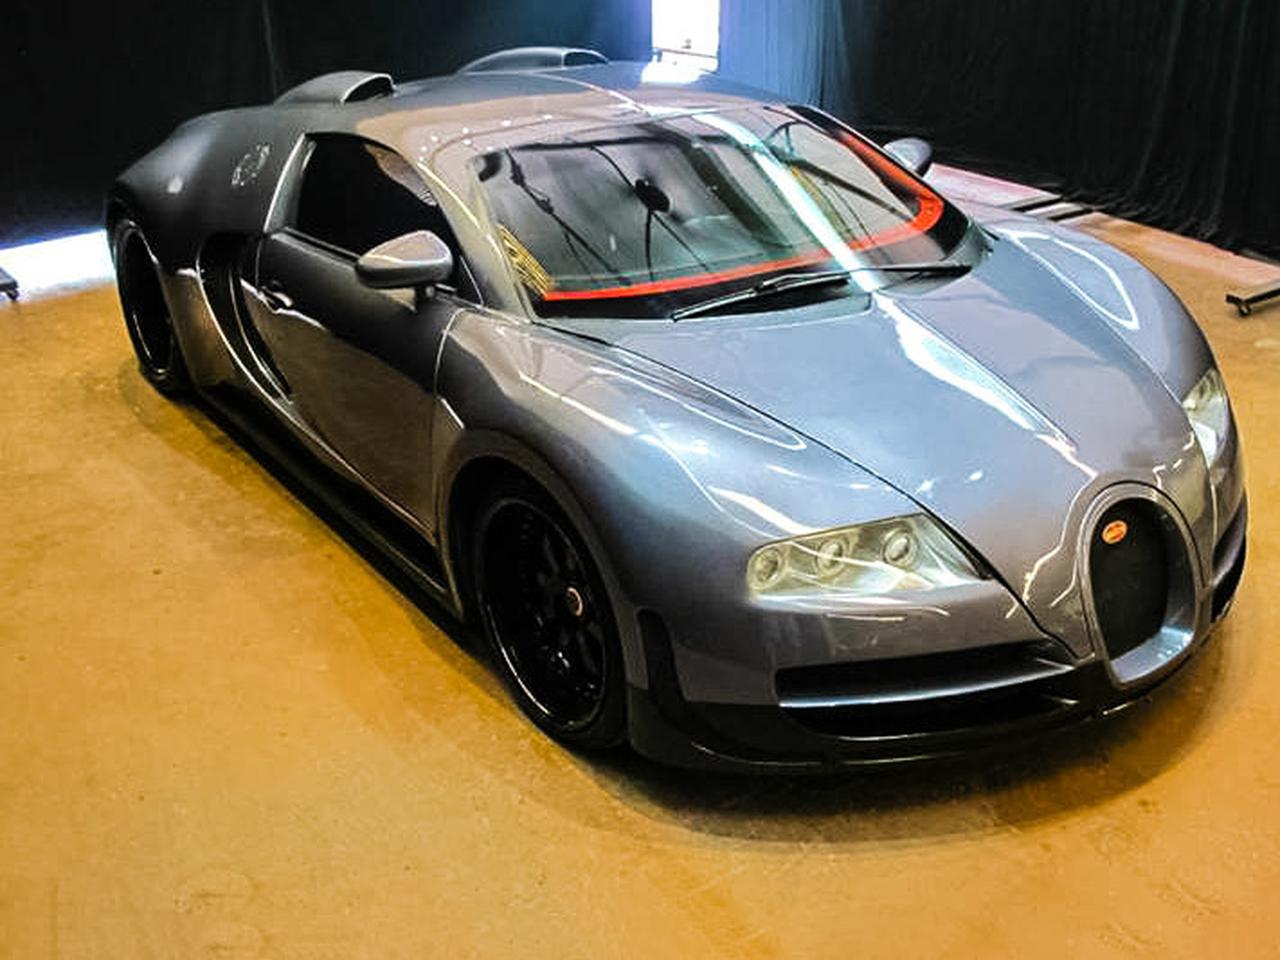   Bugatti Veyron   55 000  - Qutoru